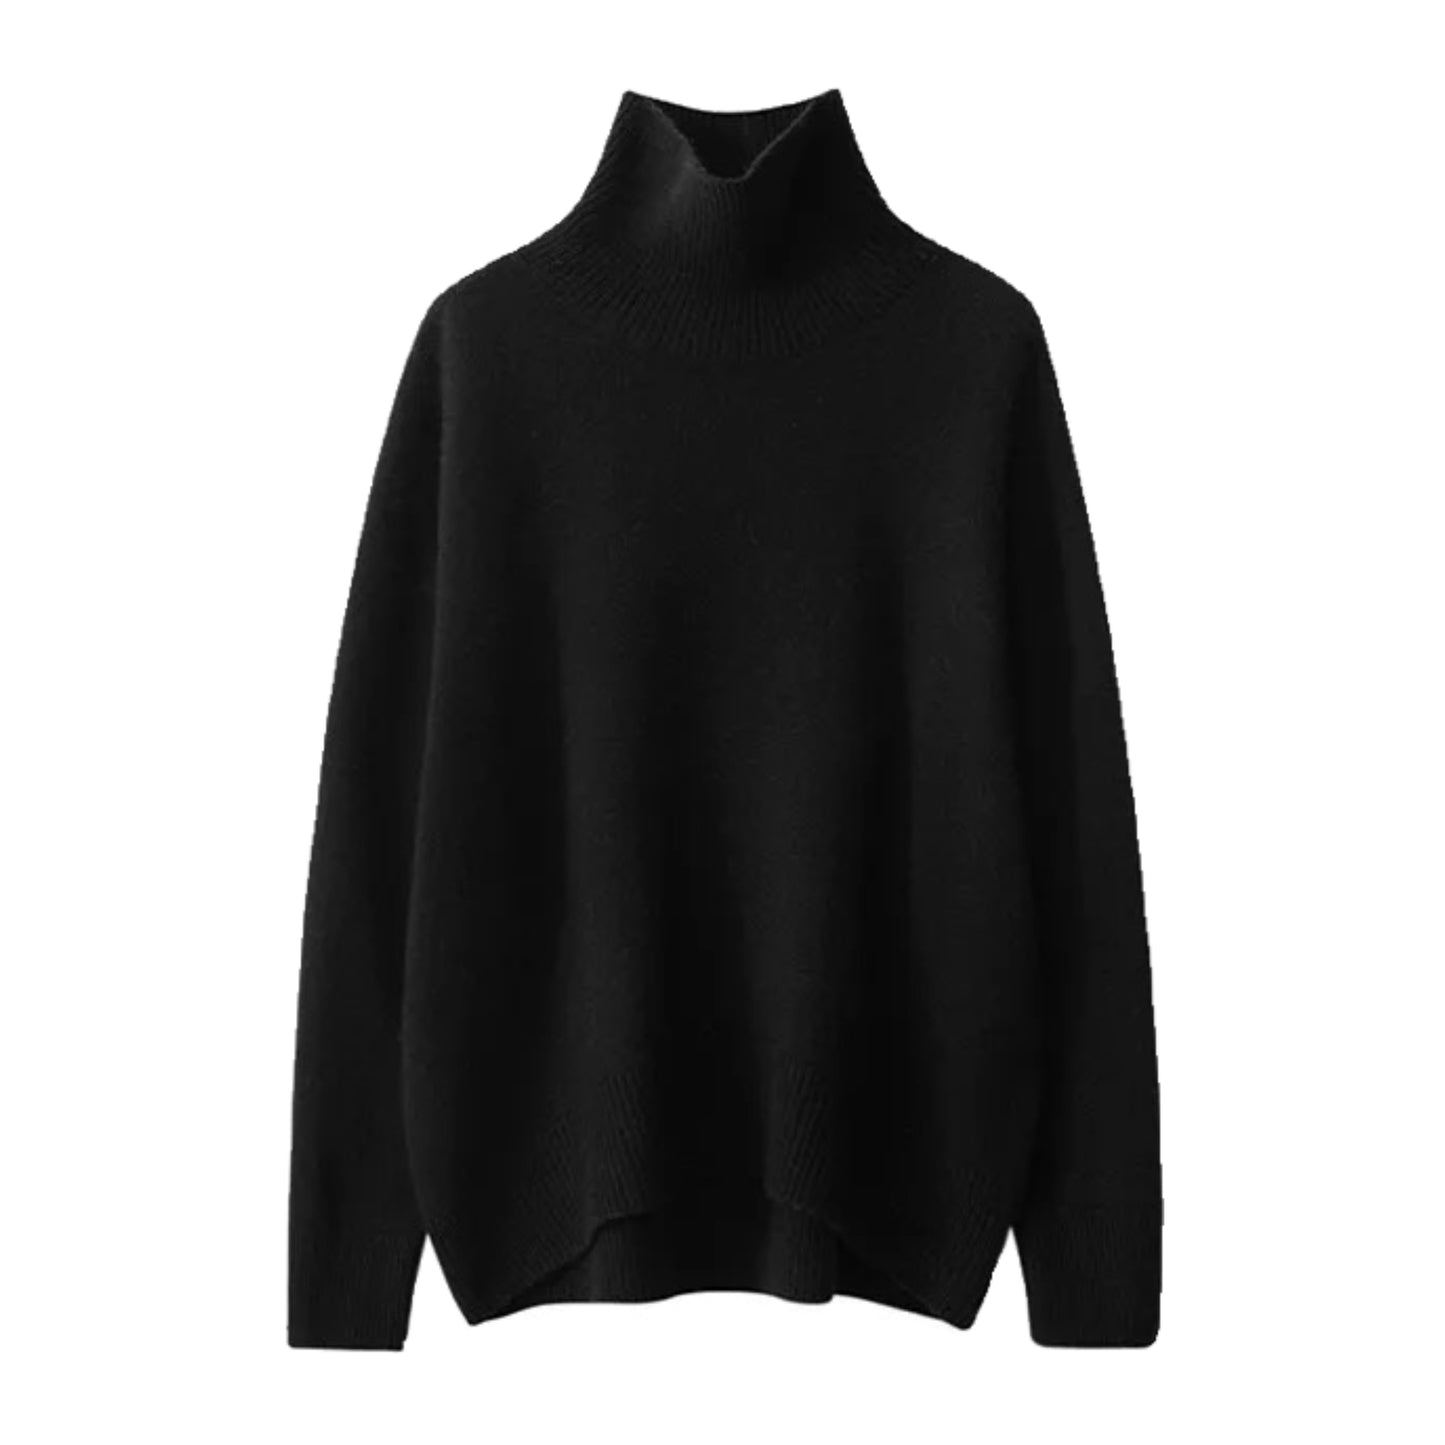 Black Knit Turtleneck Oversized Pull Over Sweater